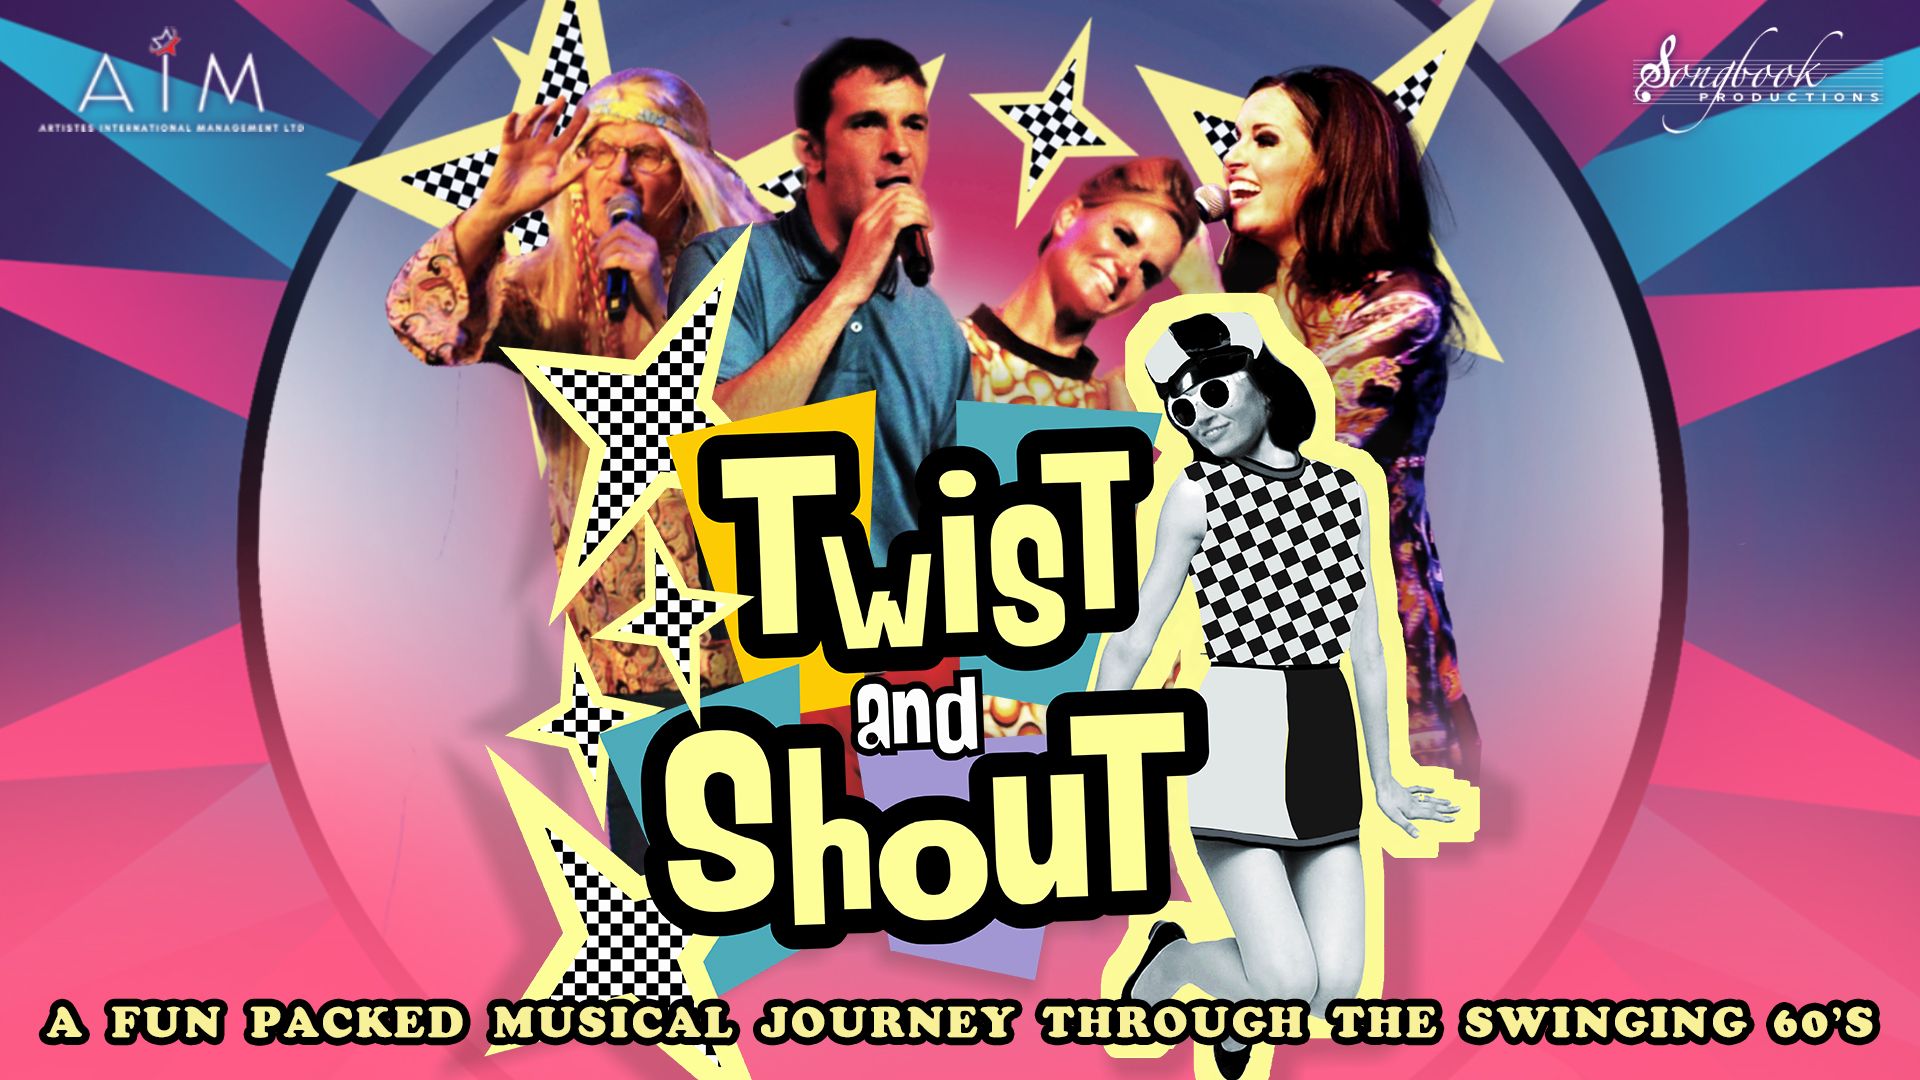 Albert Halls Twist and Shout promotion